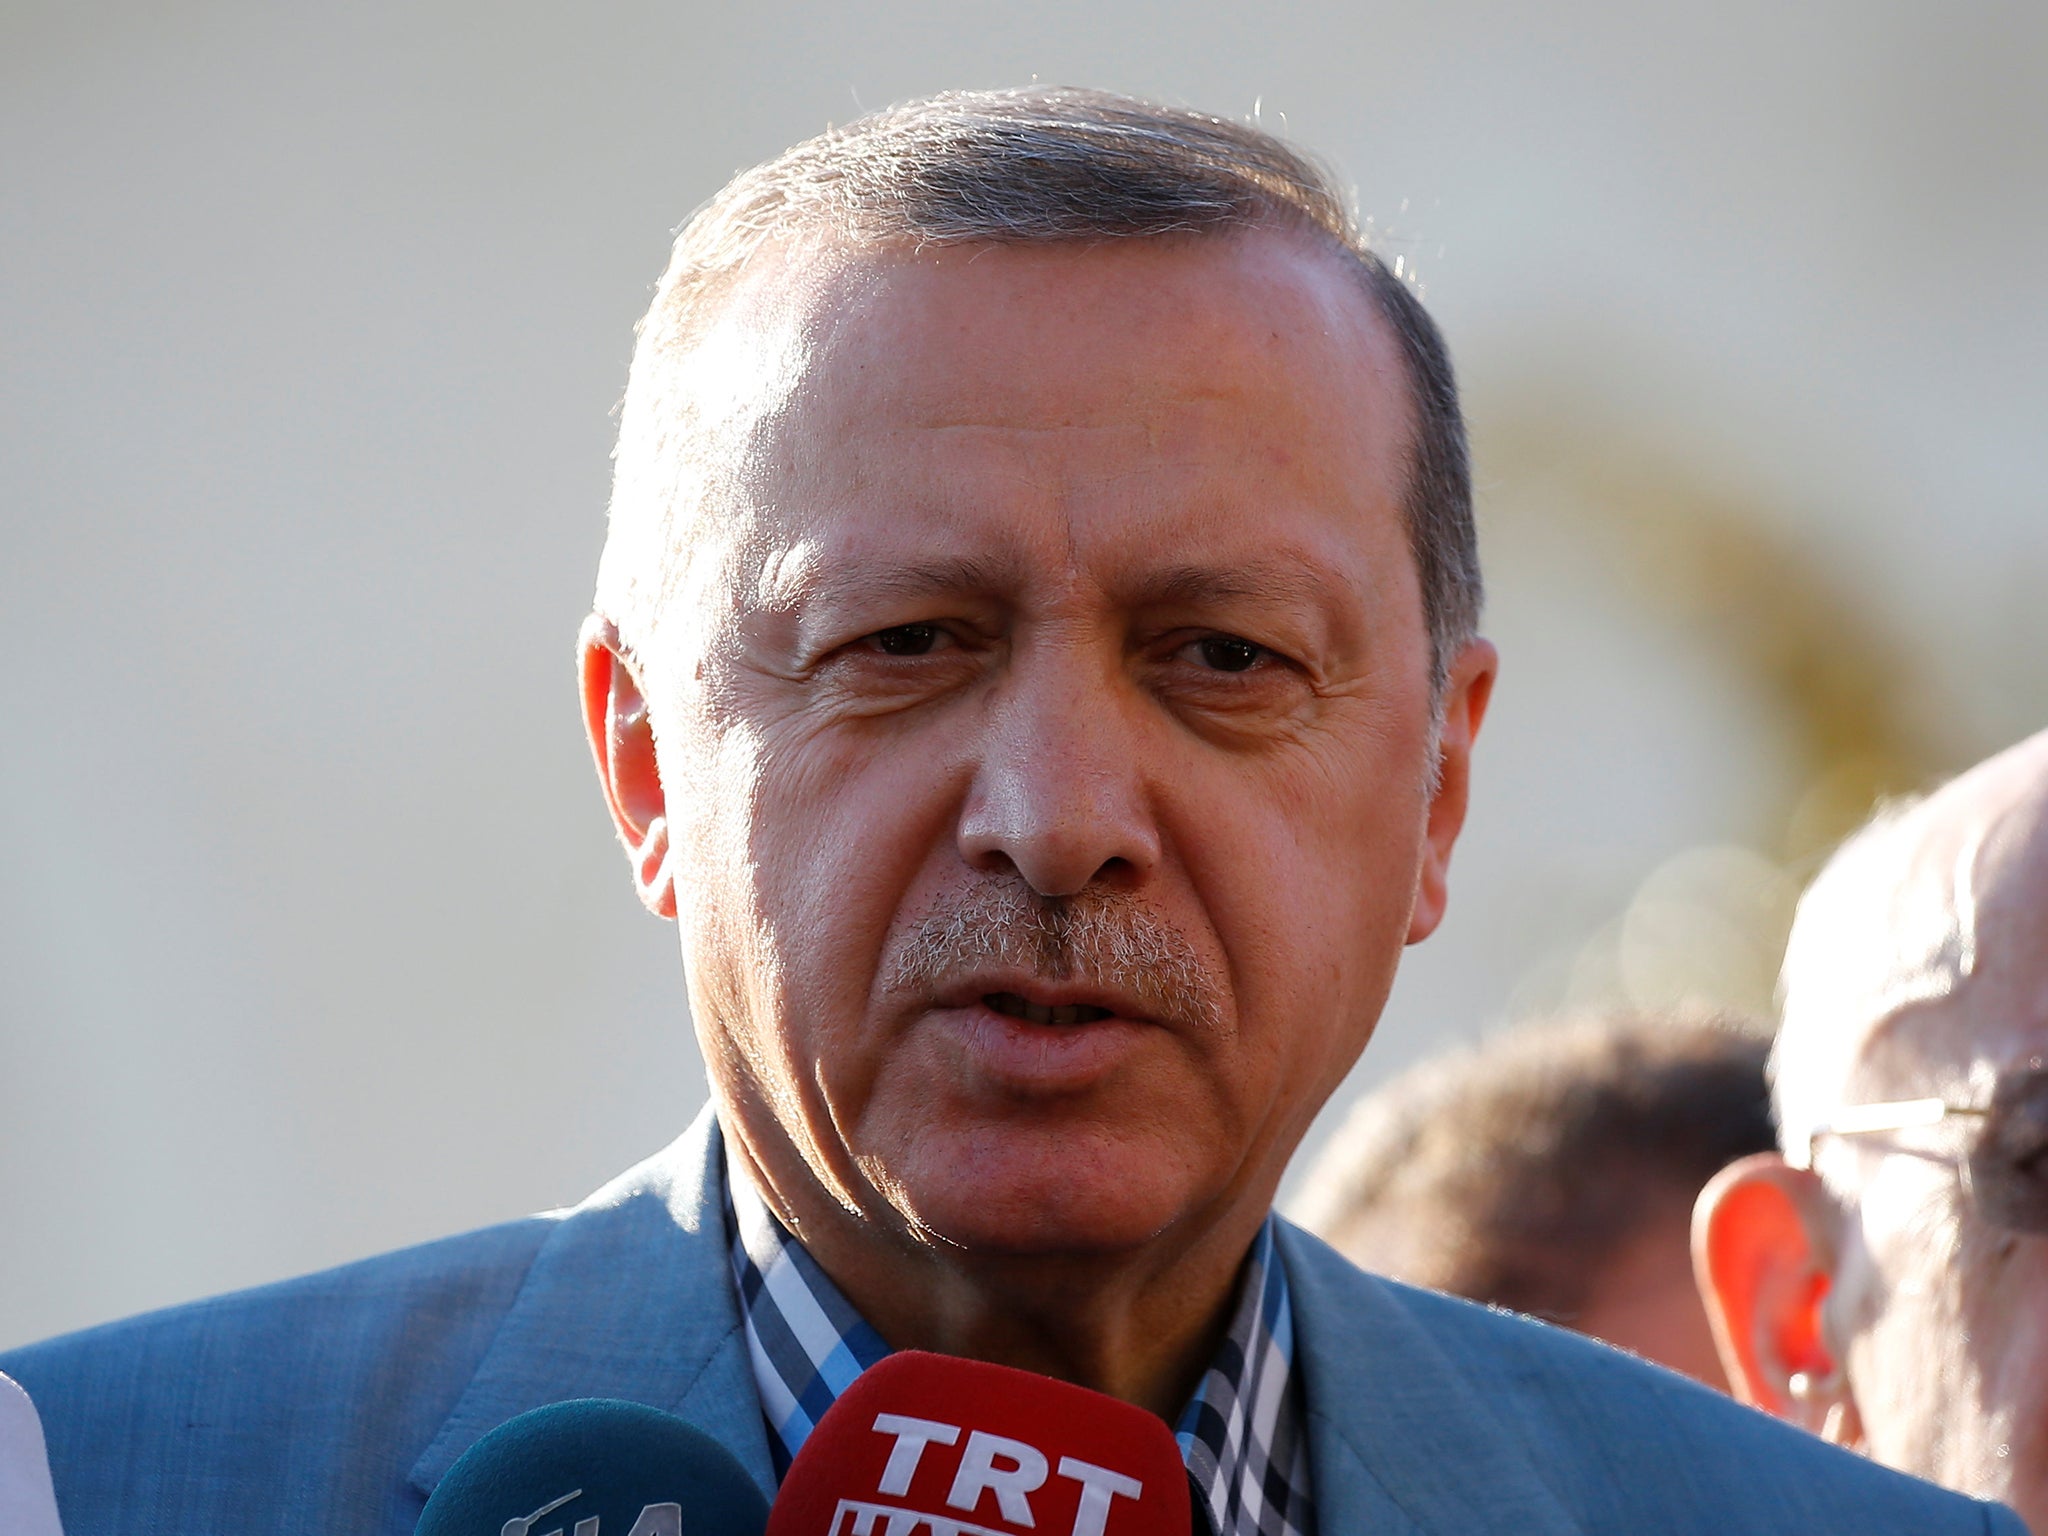 Turkey's President Recep Tayyip Erdogan talks to media